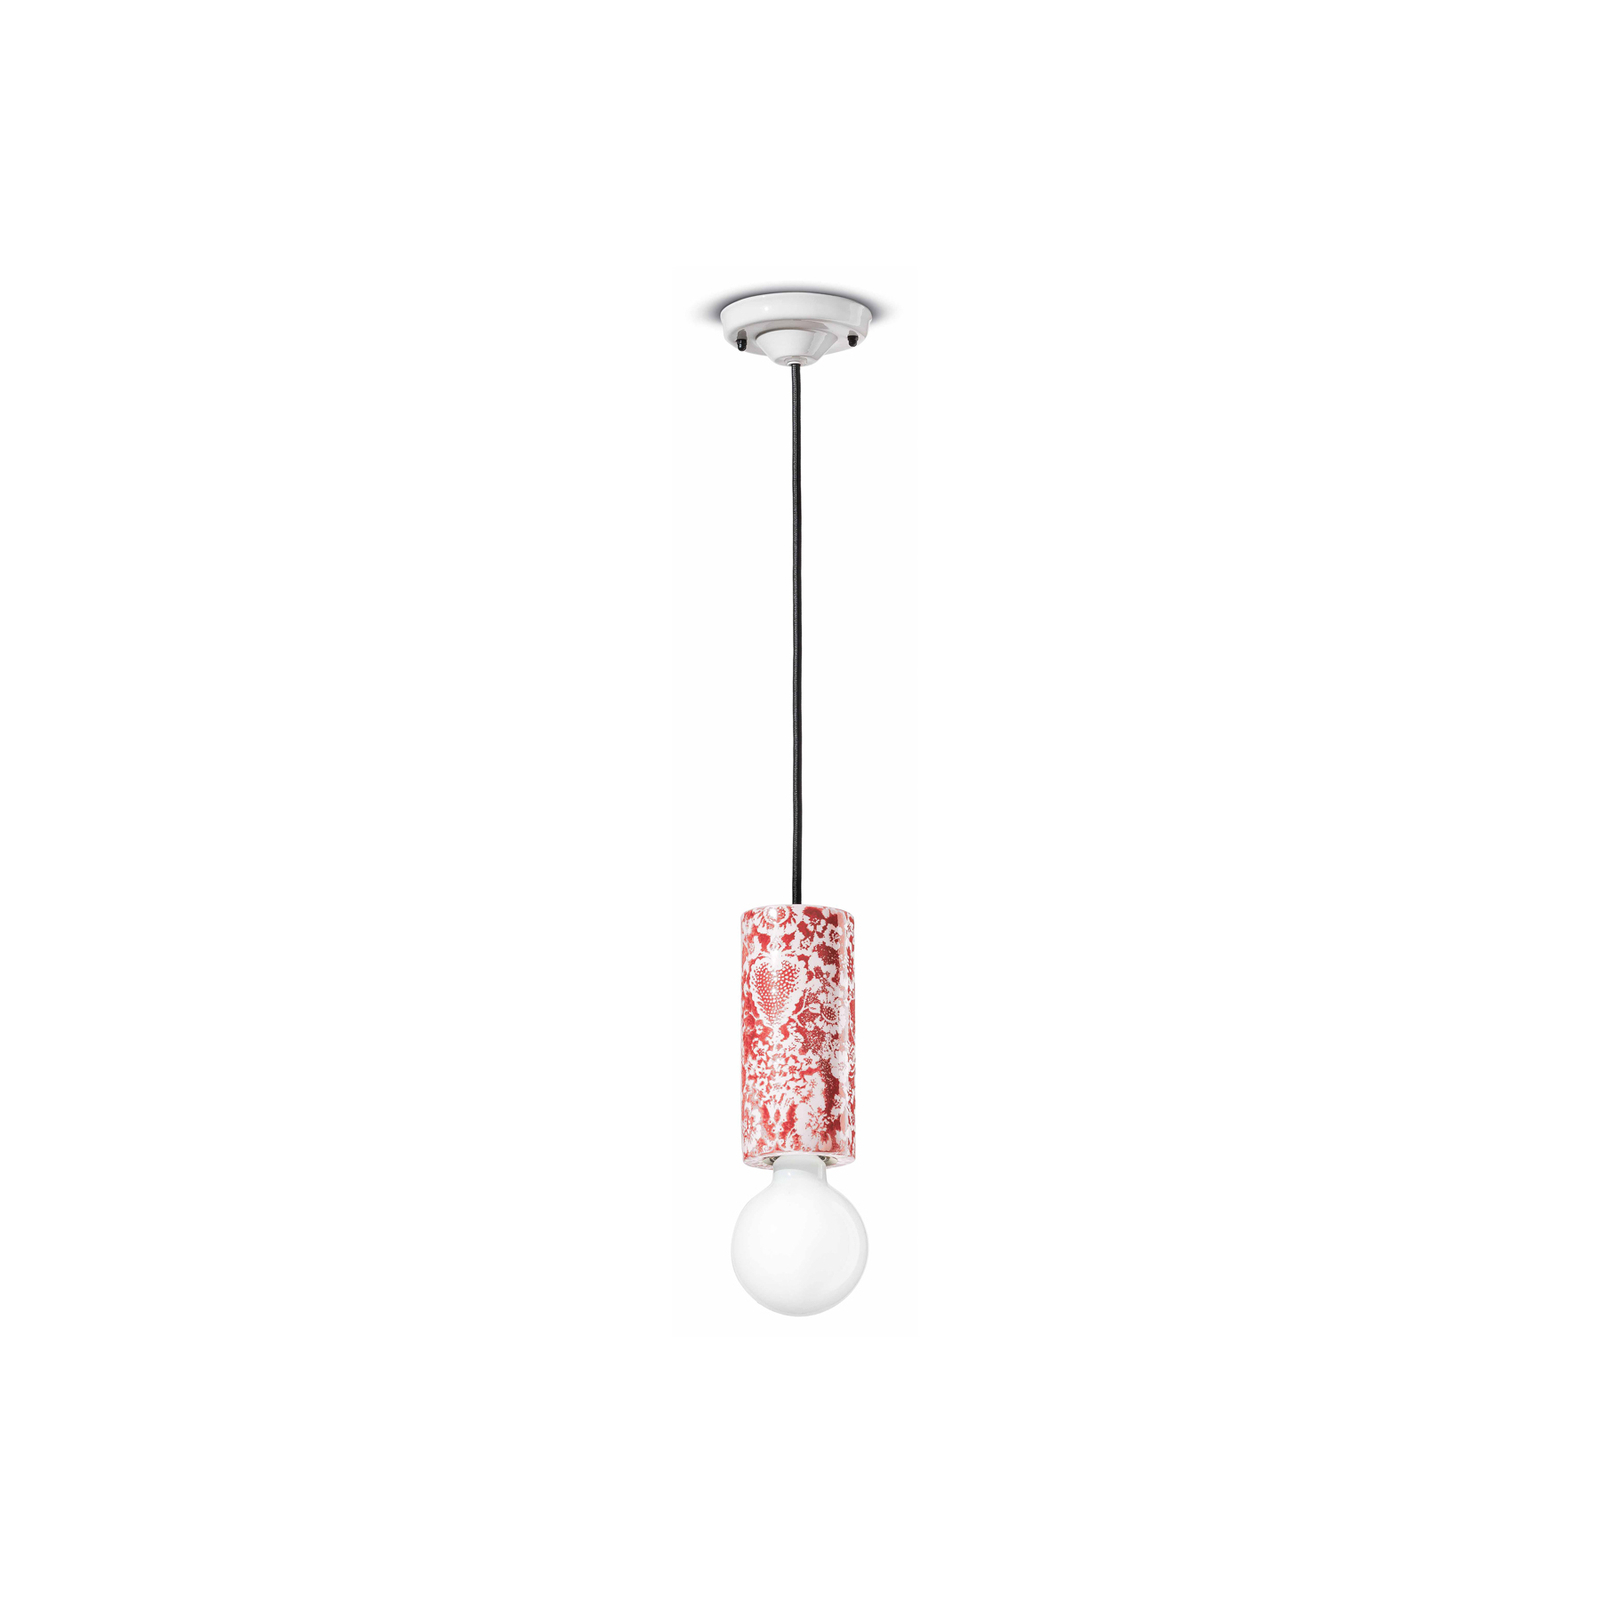 PI závěsná lampa, květinový vzor Ø 8 cm červená/bílá